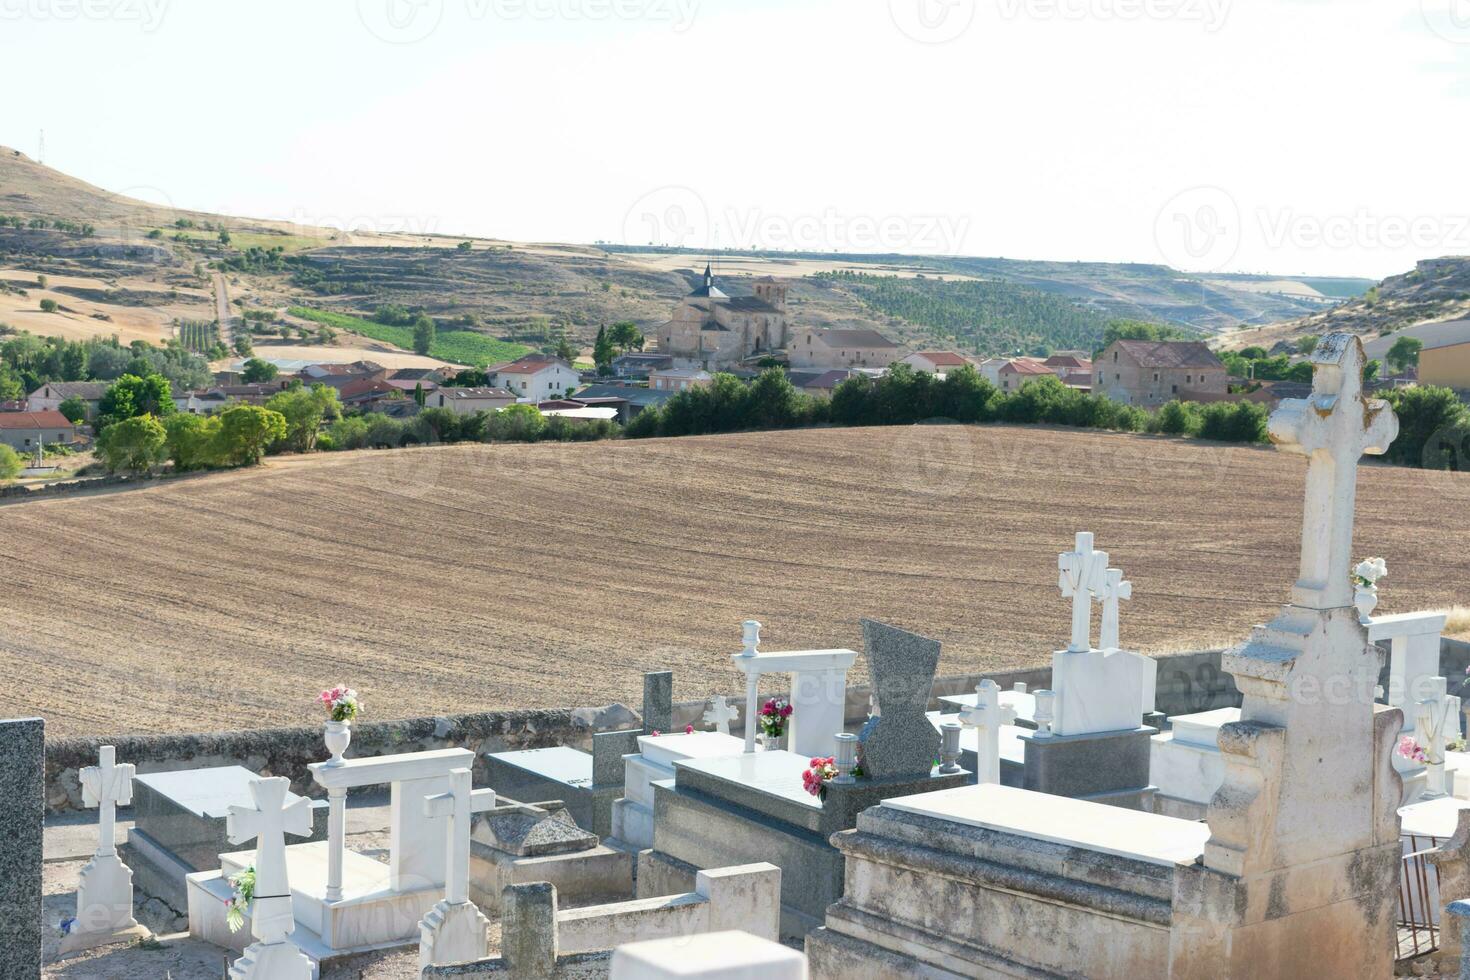 tradicional católico cementerio con granito panteones foto